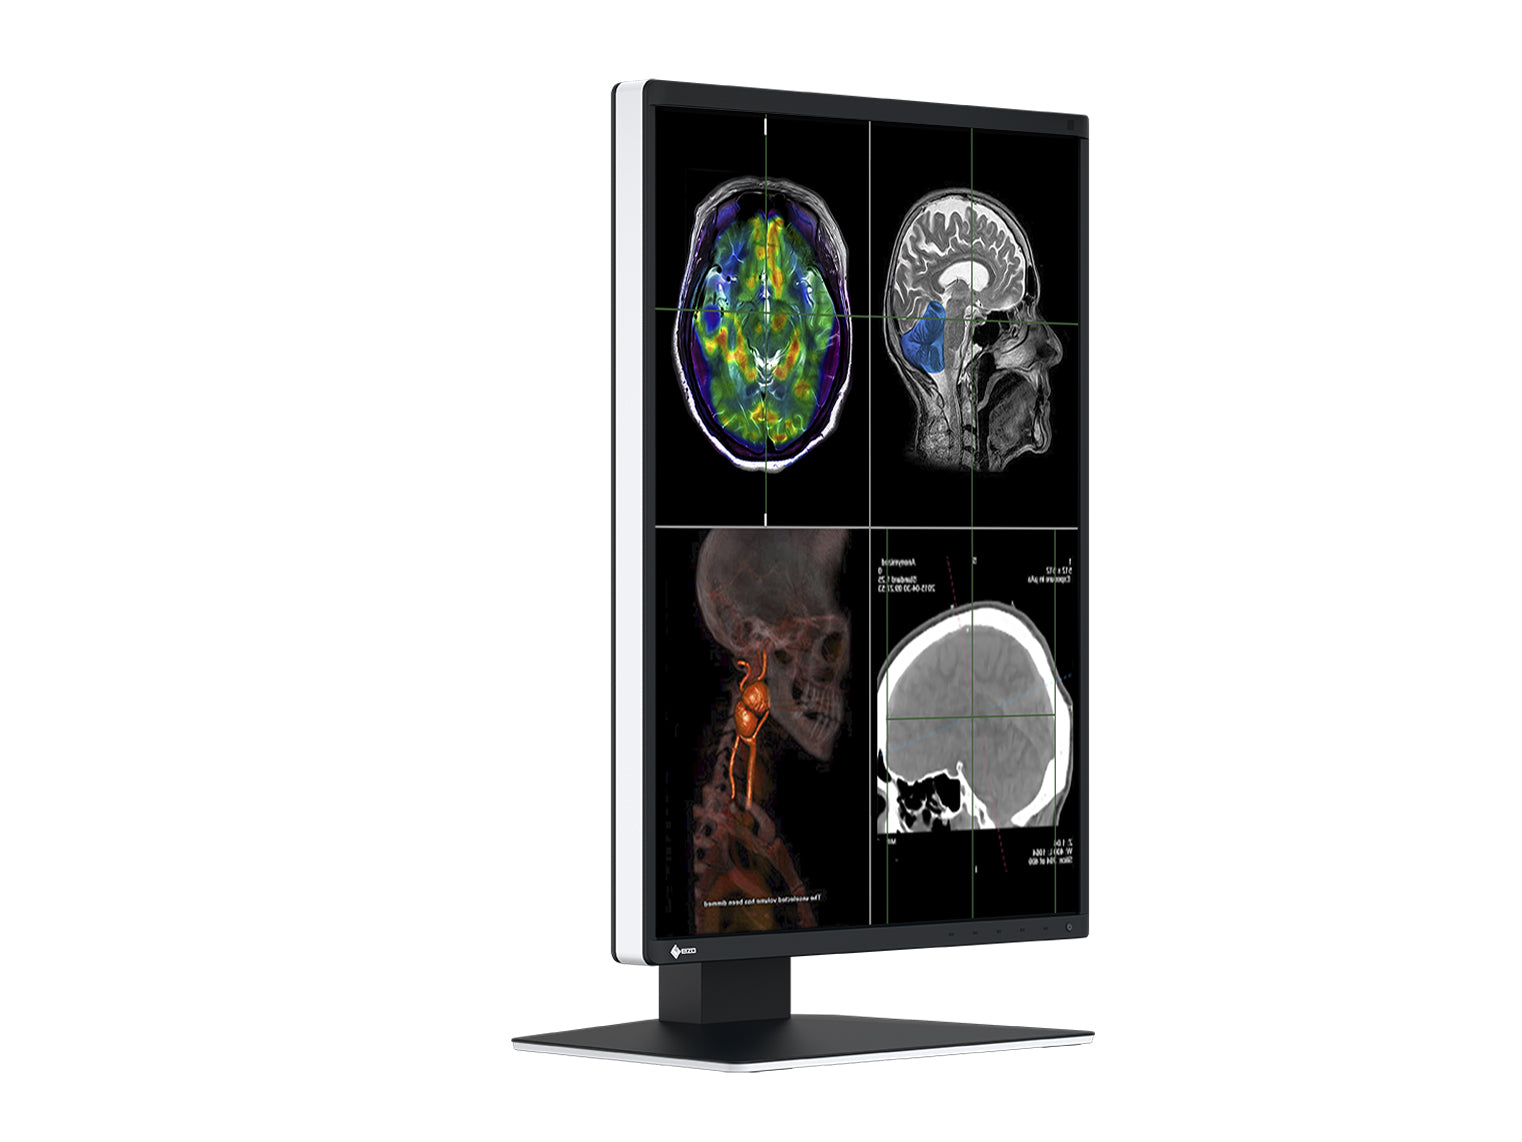 Eizo RadiForce RX370 3MP 21" Color LED General Radiology Diagnostic PACS Display (RX370)